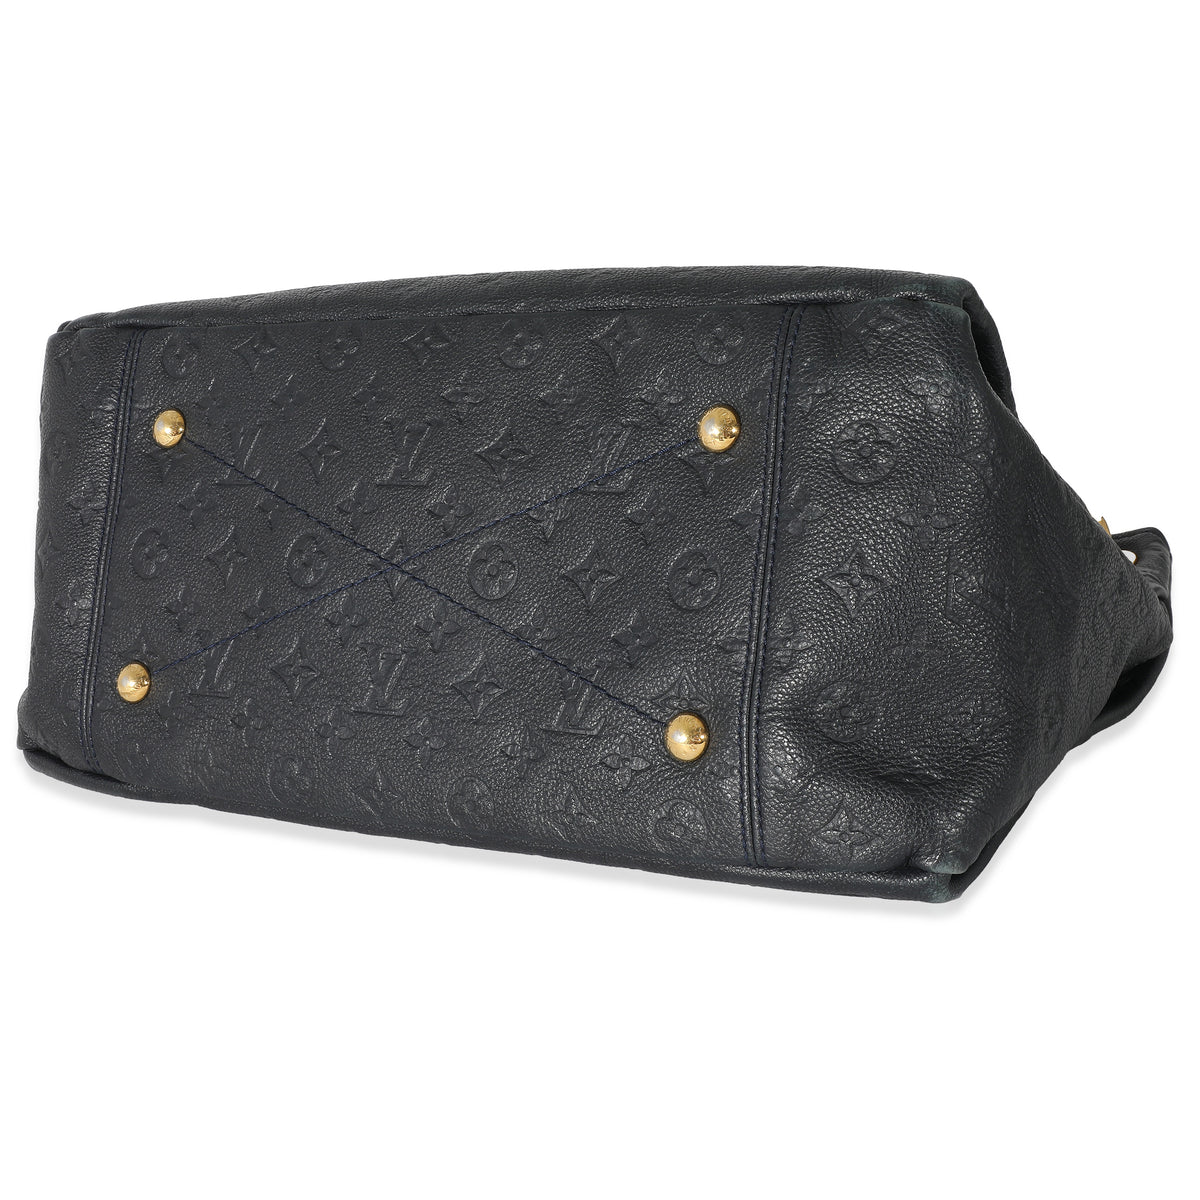 Louis Vuitton Infini Monogram Empreinte Leather Artsy MM Bag